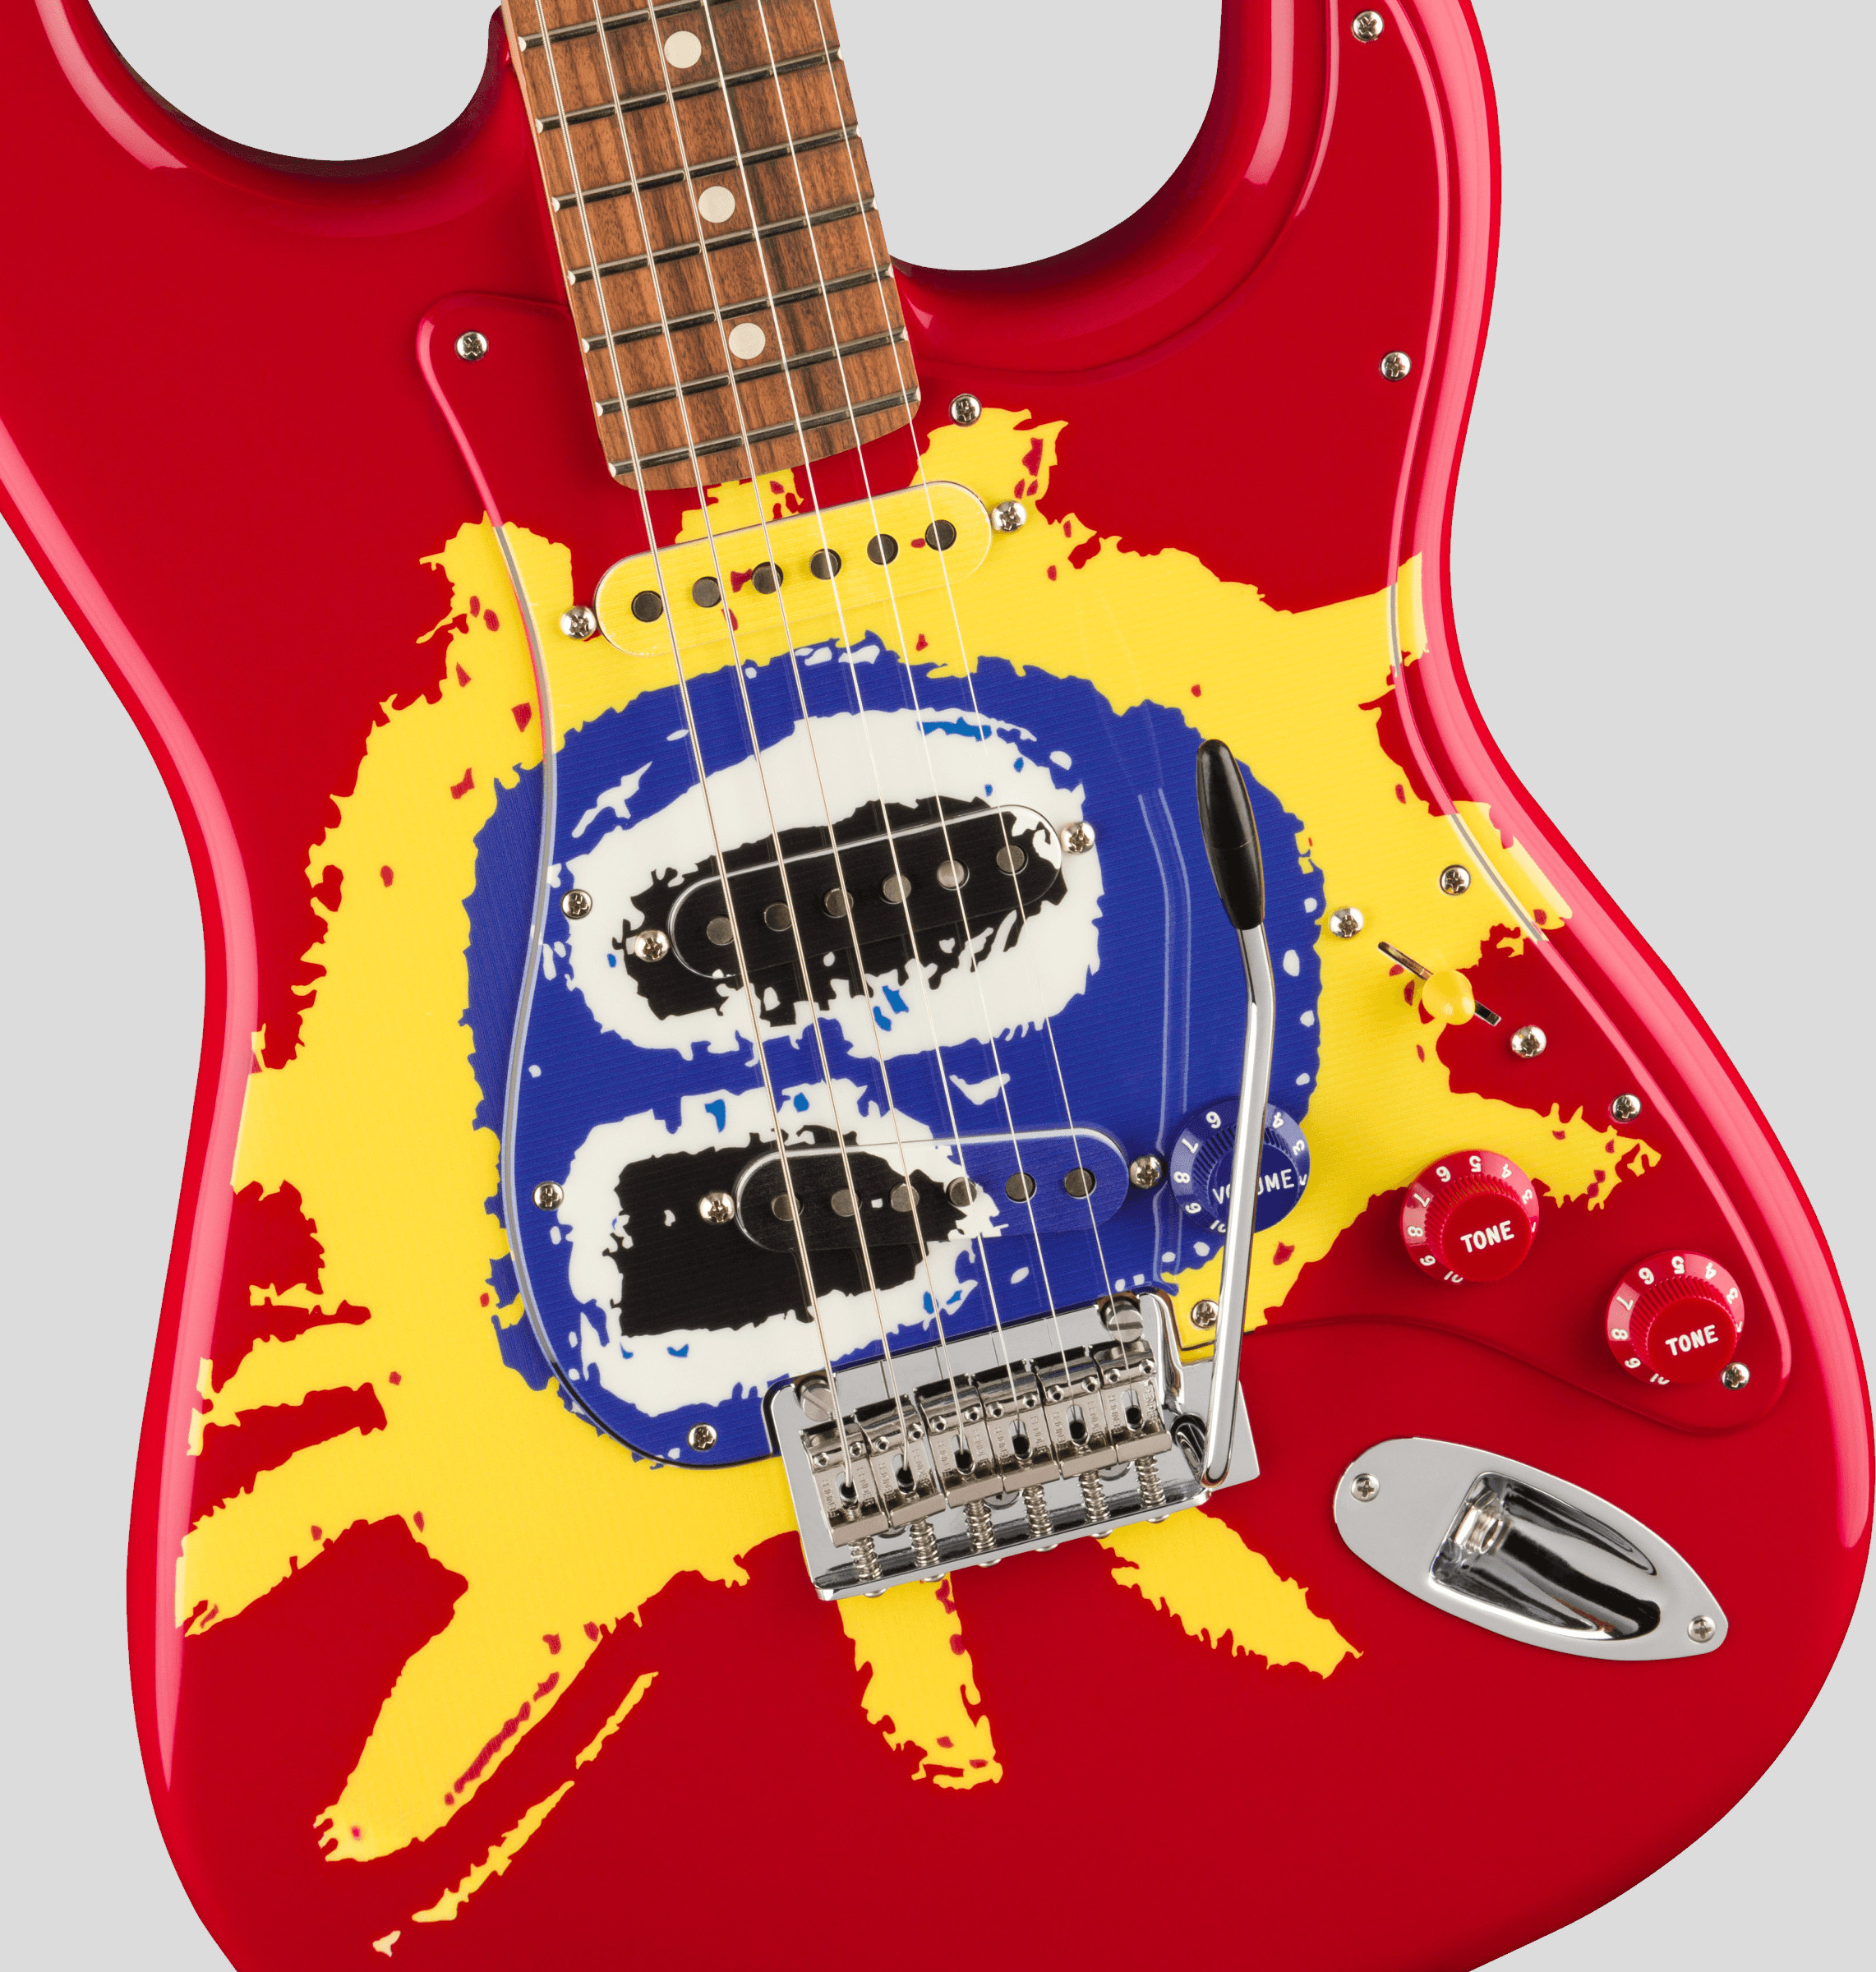 Fender 30th Anniversary Scremadelica Stratocaster 4